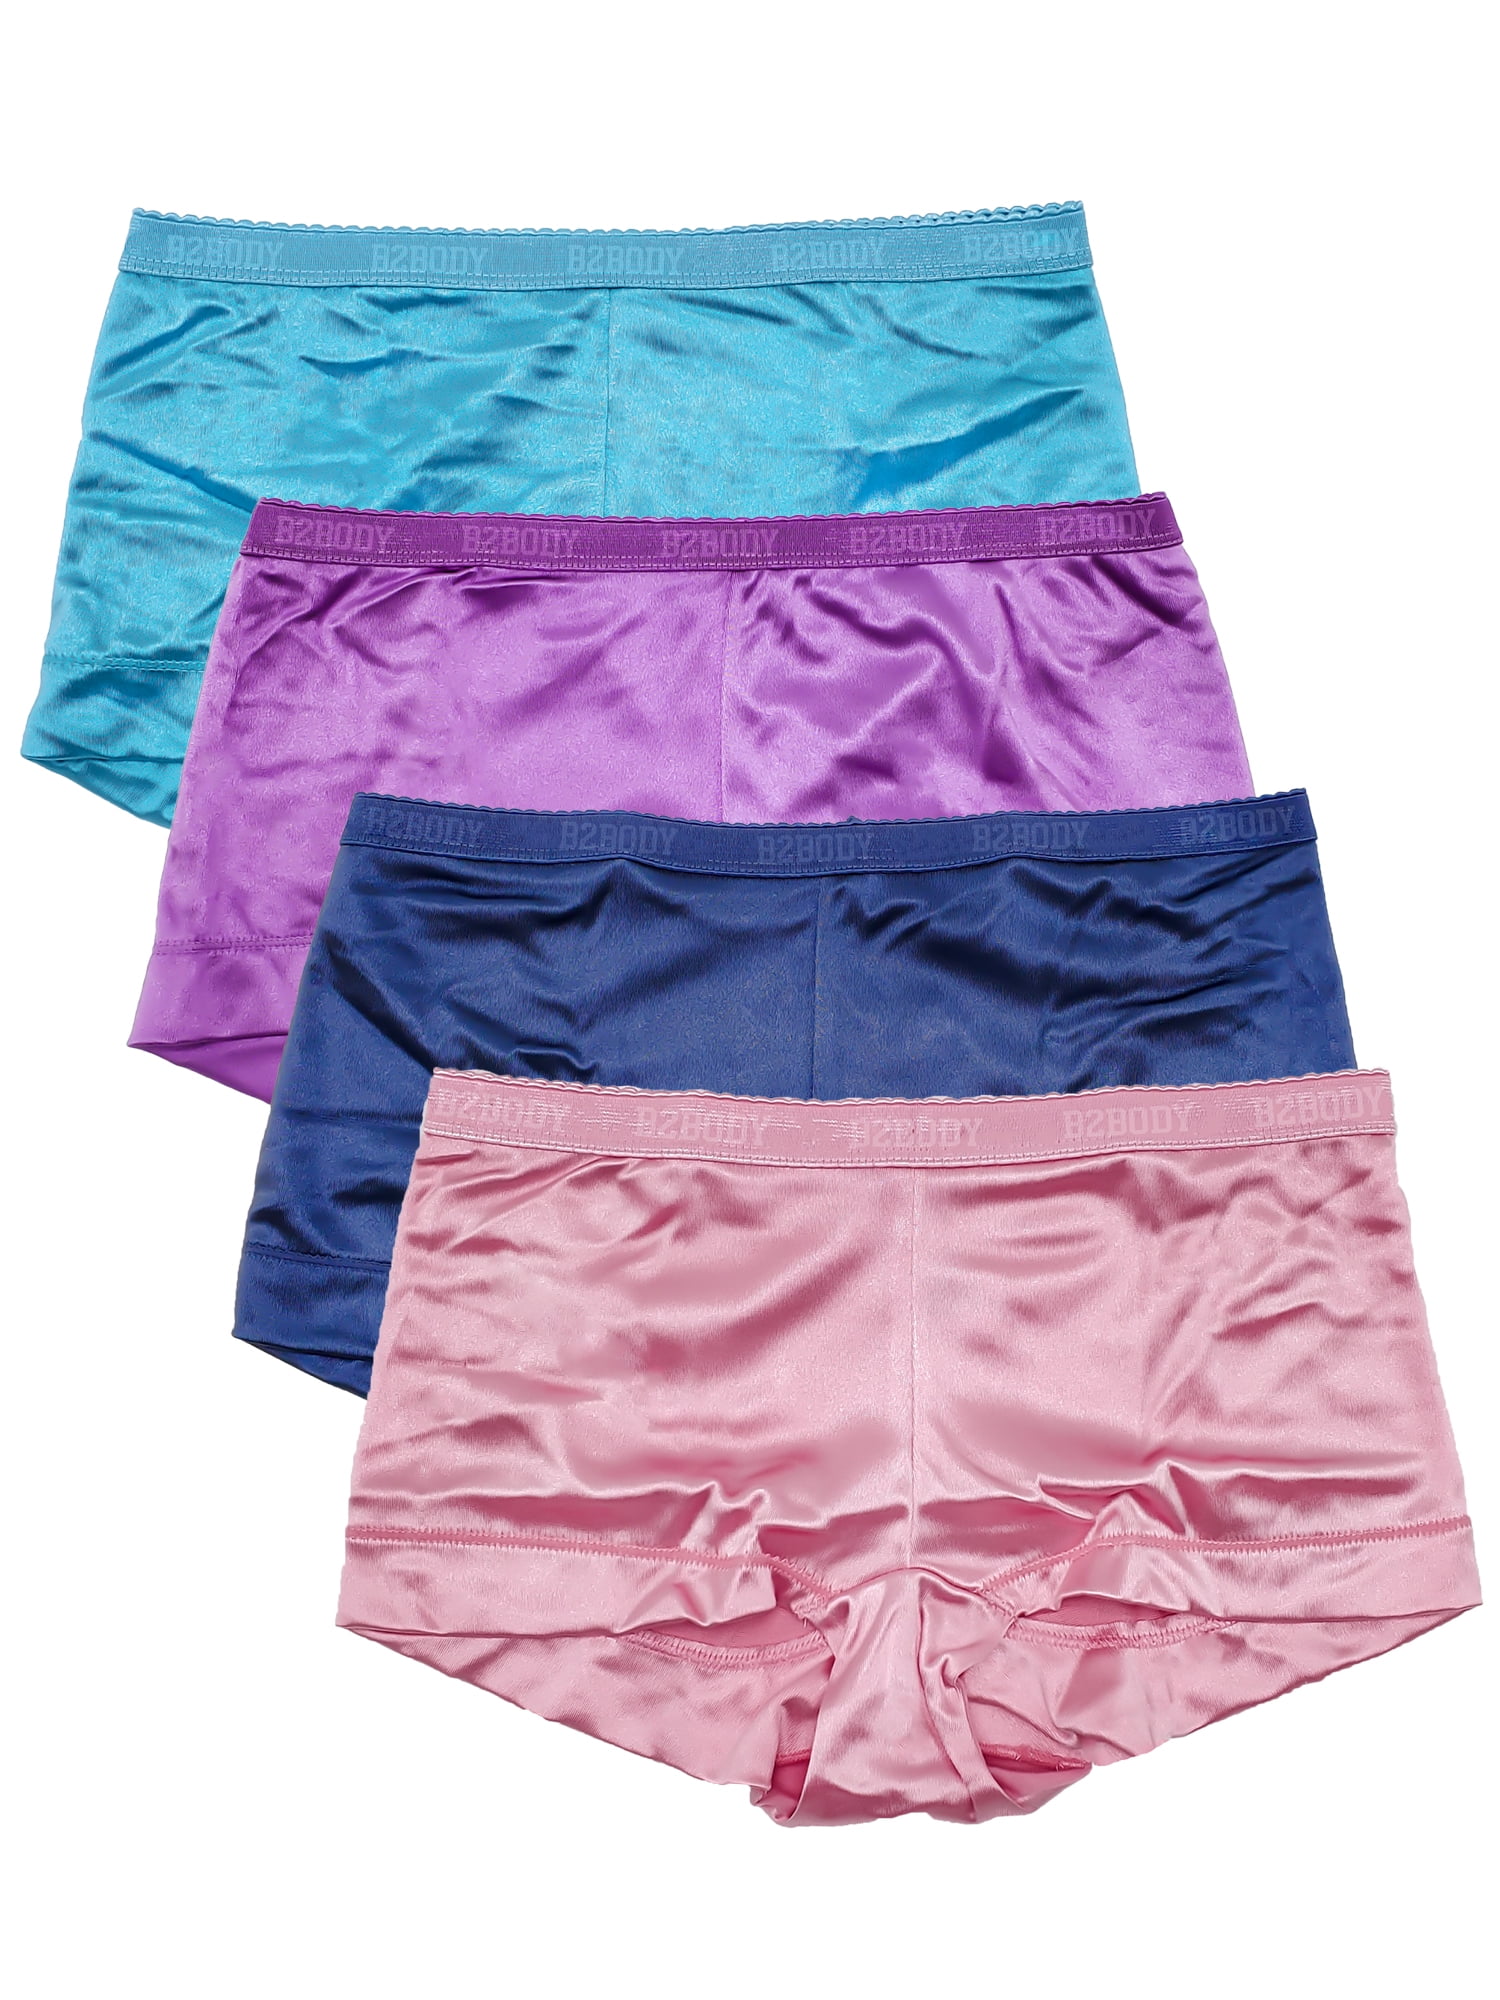 Barbra Women's Panties Silky Sexy Satin Boyshorts Small to Plus Size  Multi-Pack 